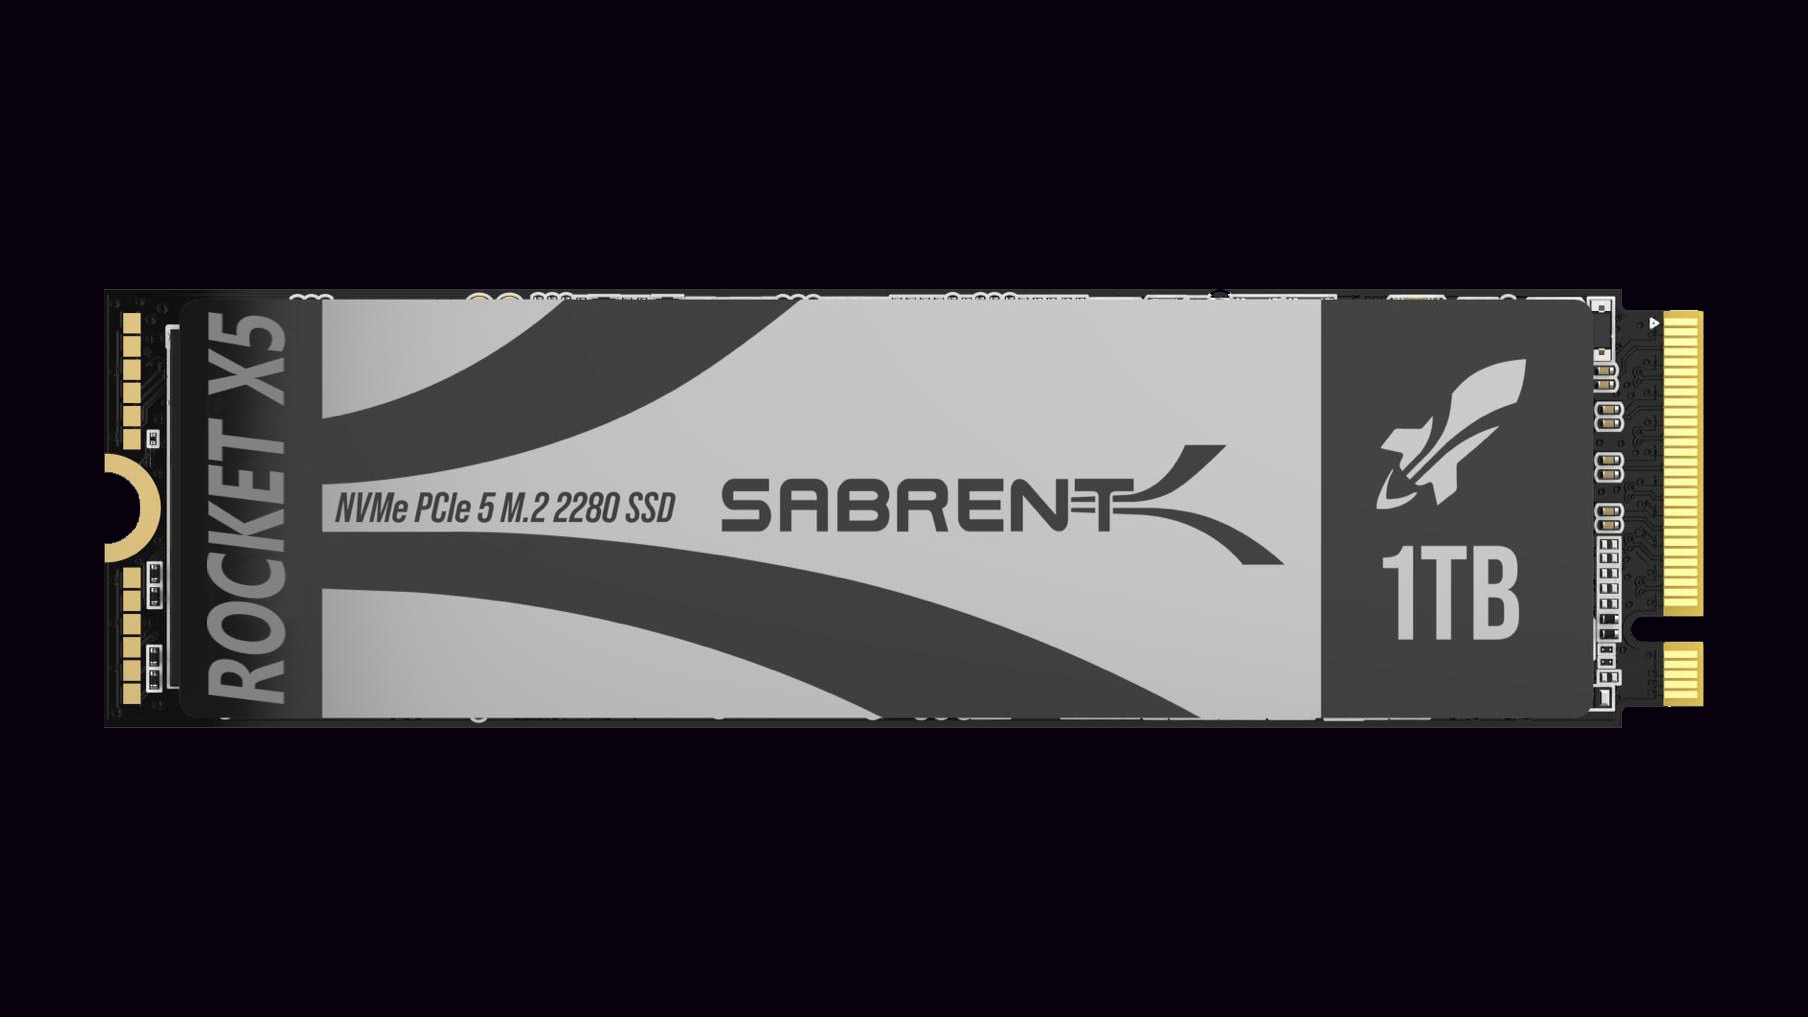 Sabrent Rocket X5 PCIe Gen5 SSDs hits 14 GB/s read speed